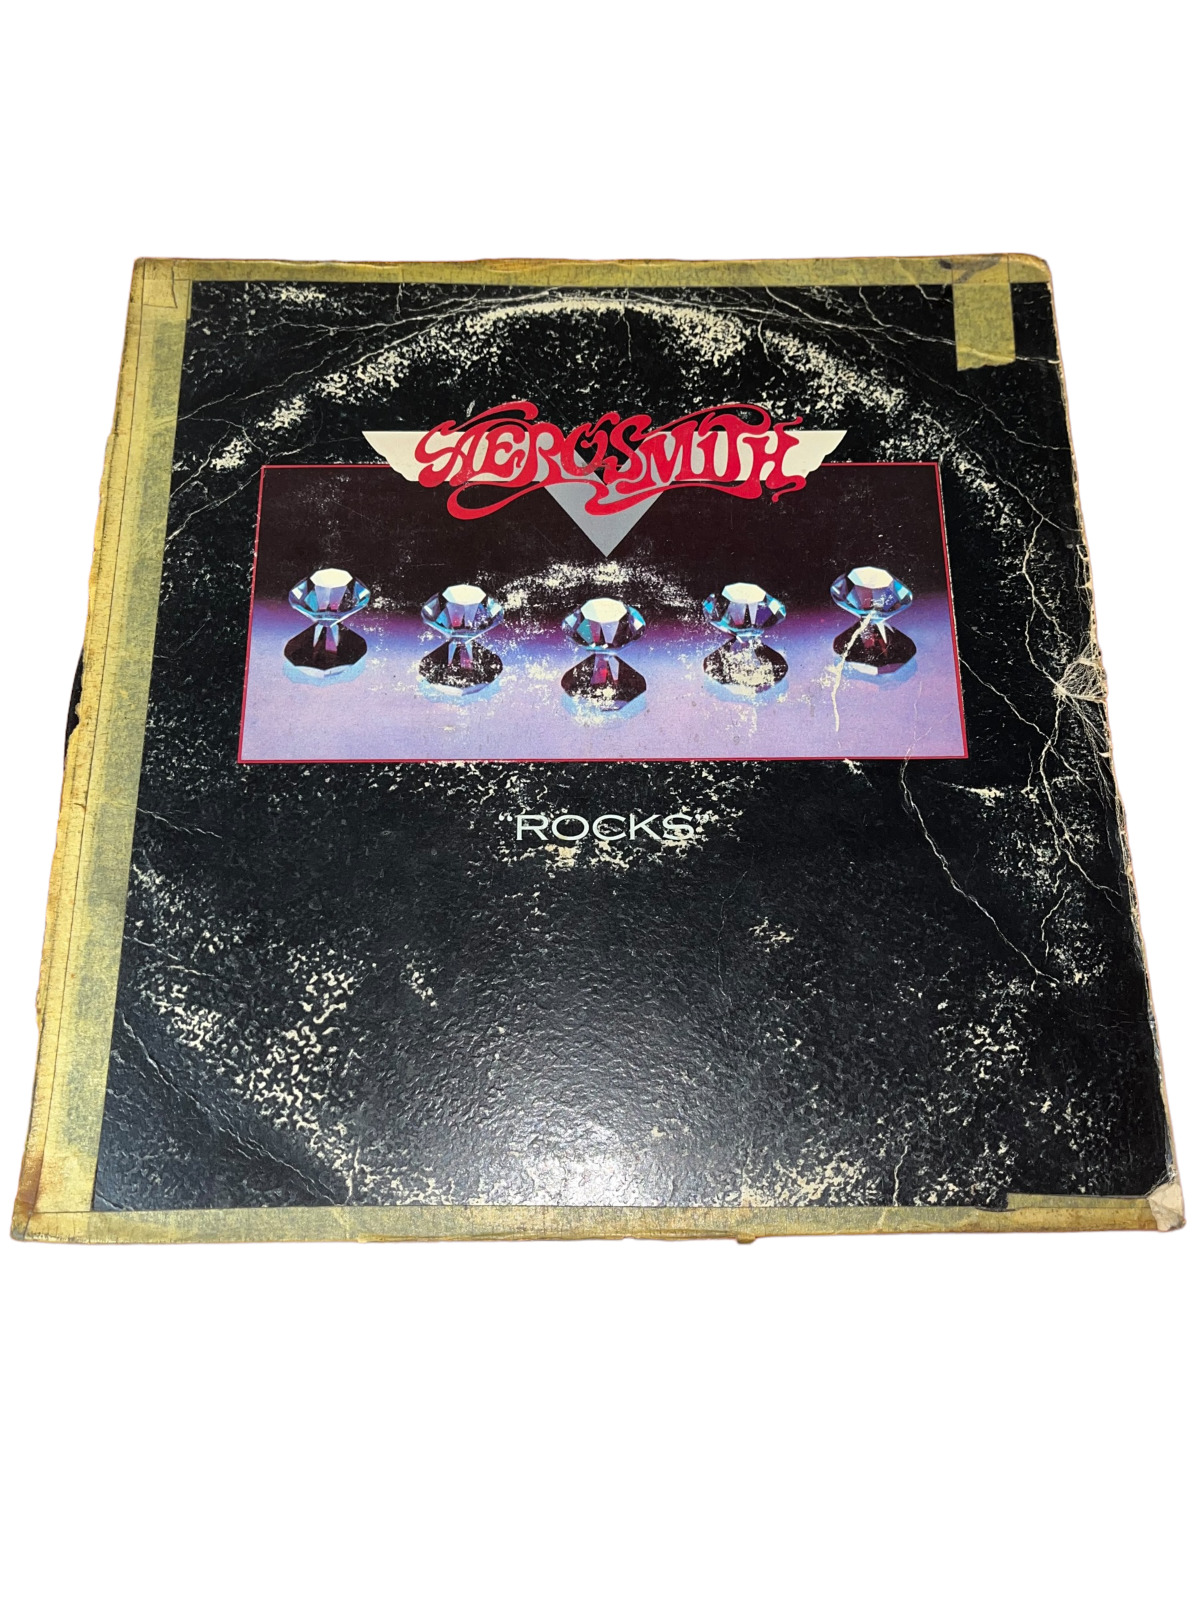 Aerosmith Rocks Vintage LP Vinyl 1976